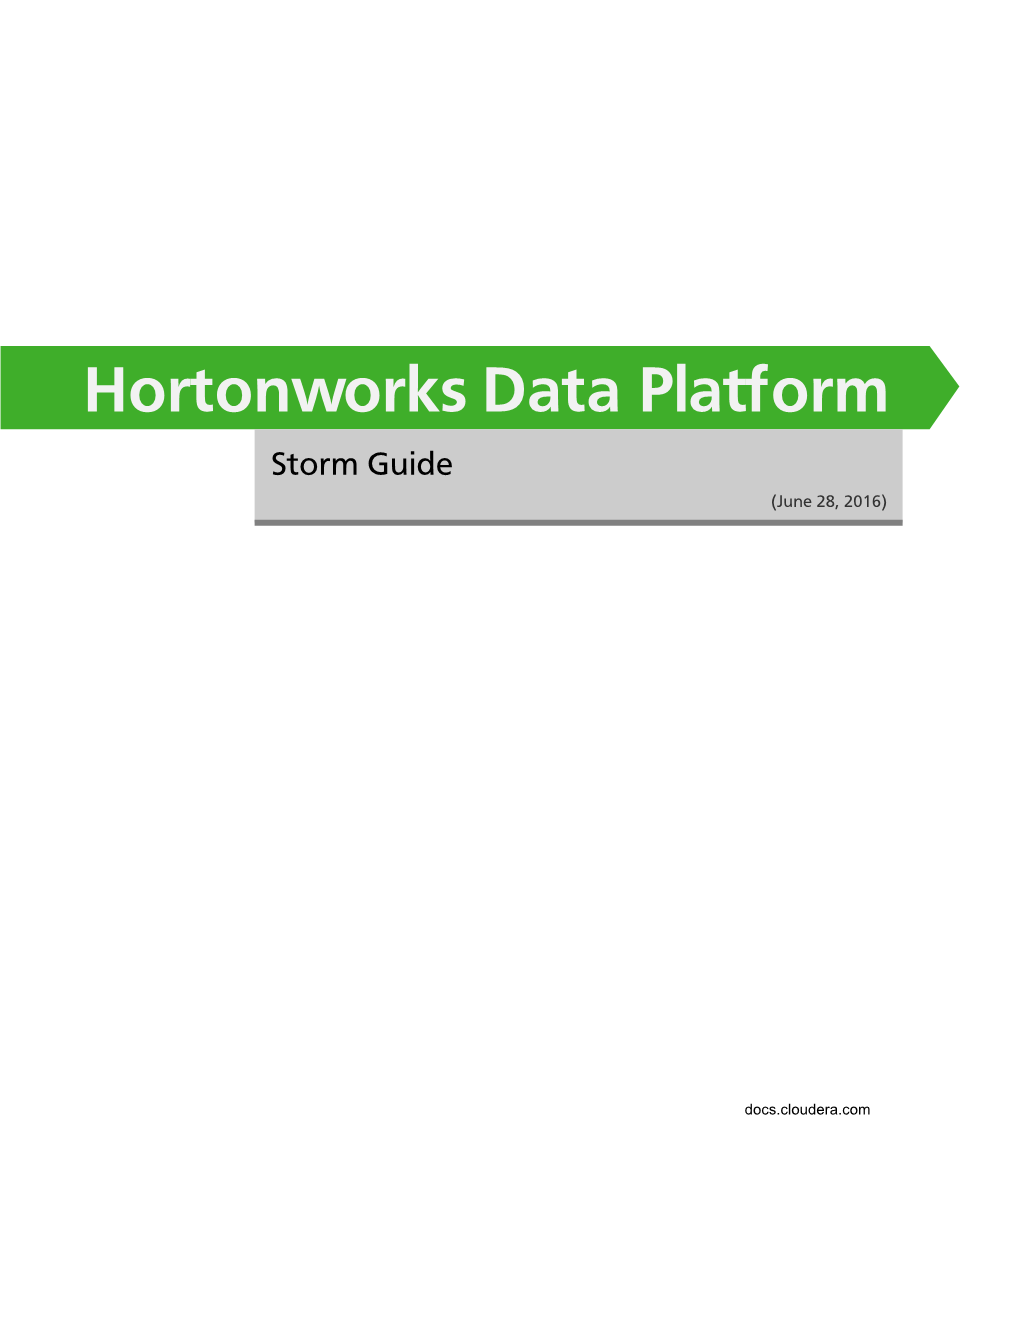 Hortonworks Data Platform Storm Guide (June 28, 2016)